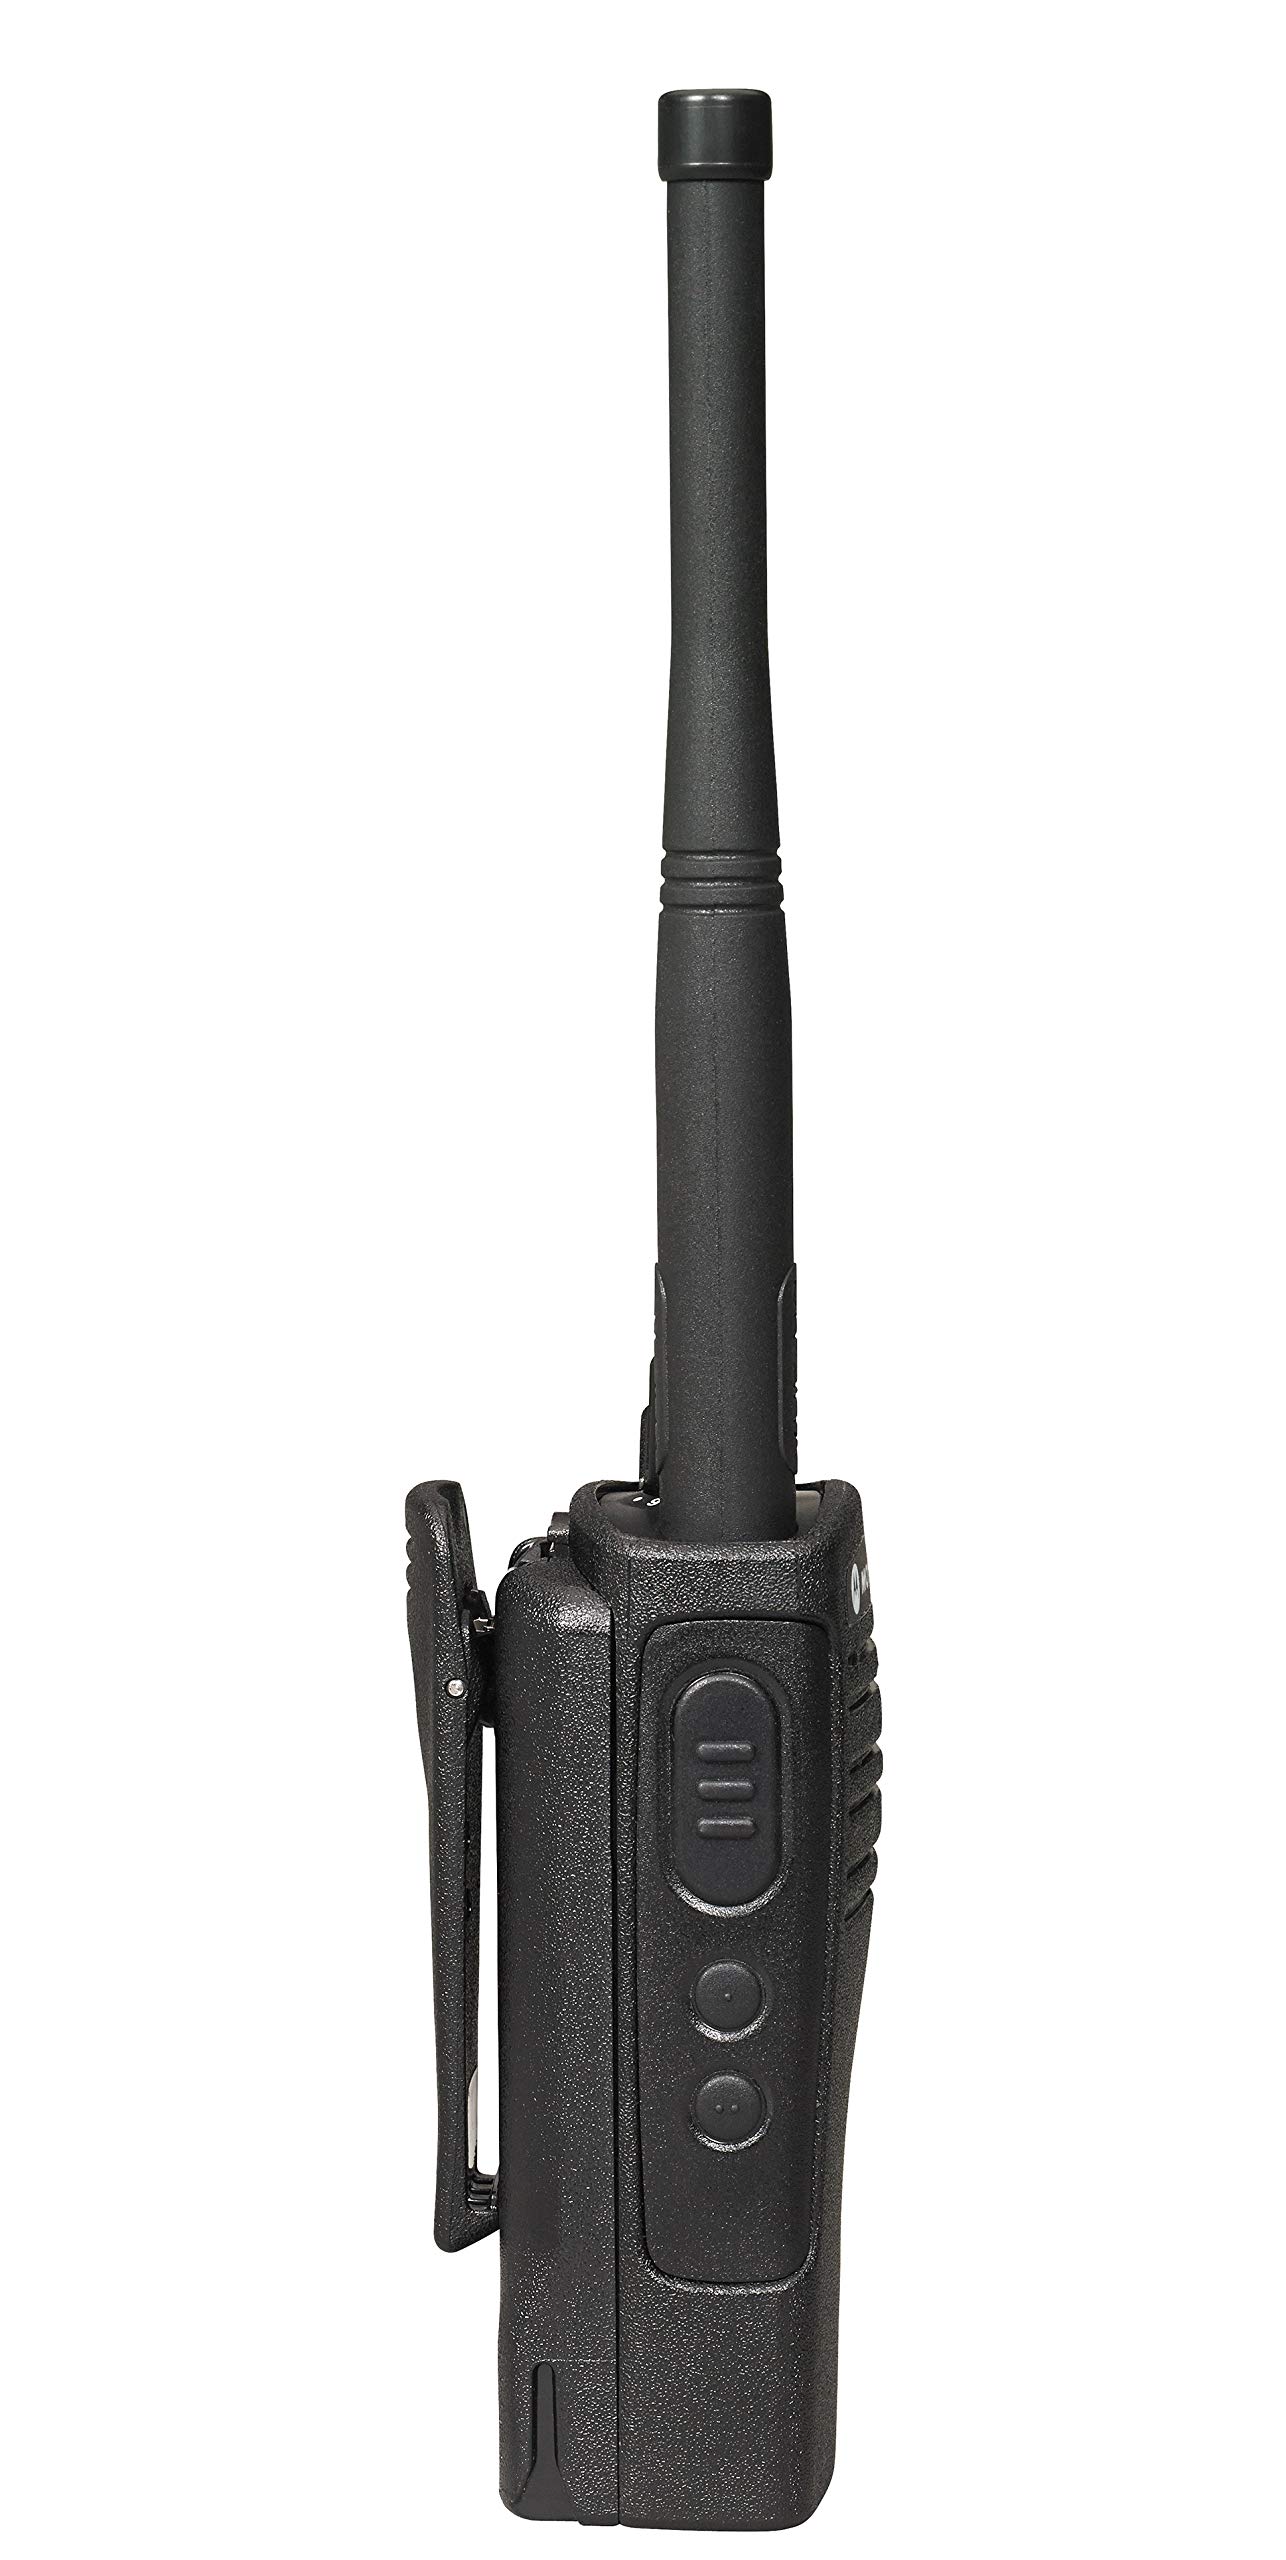 Motorola RDV5100 5-Watt, On-Site, Professional Two Way Radio (2-Pack)